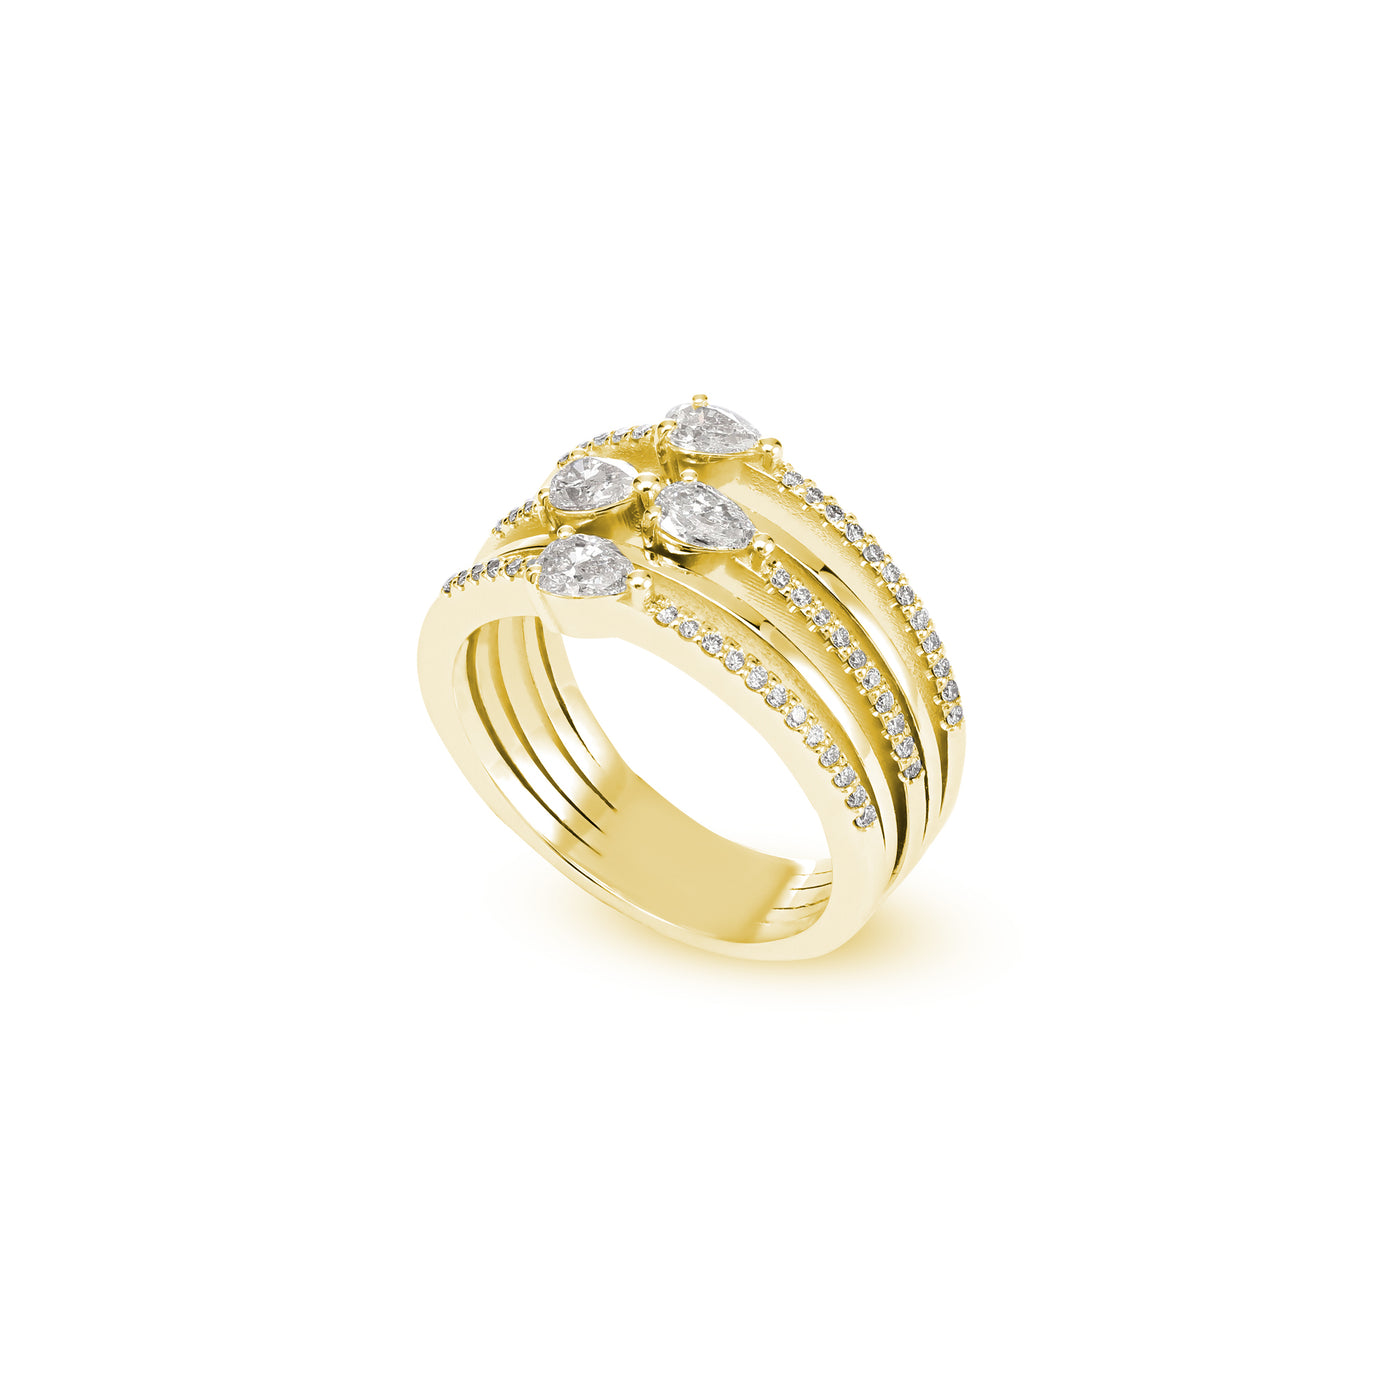 ETOILE Yellow Gold Pear Shape Diamond Ring